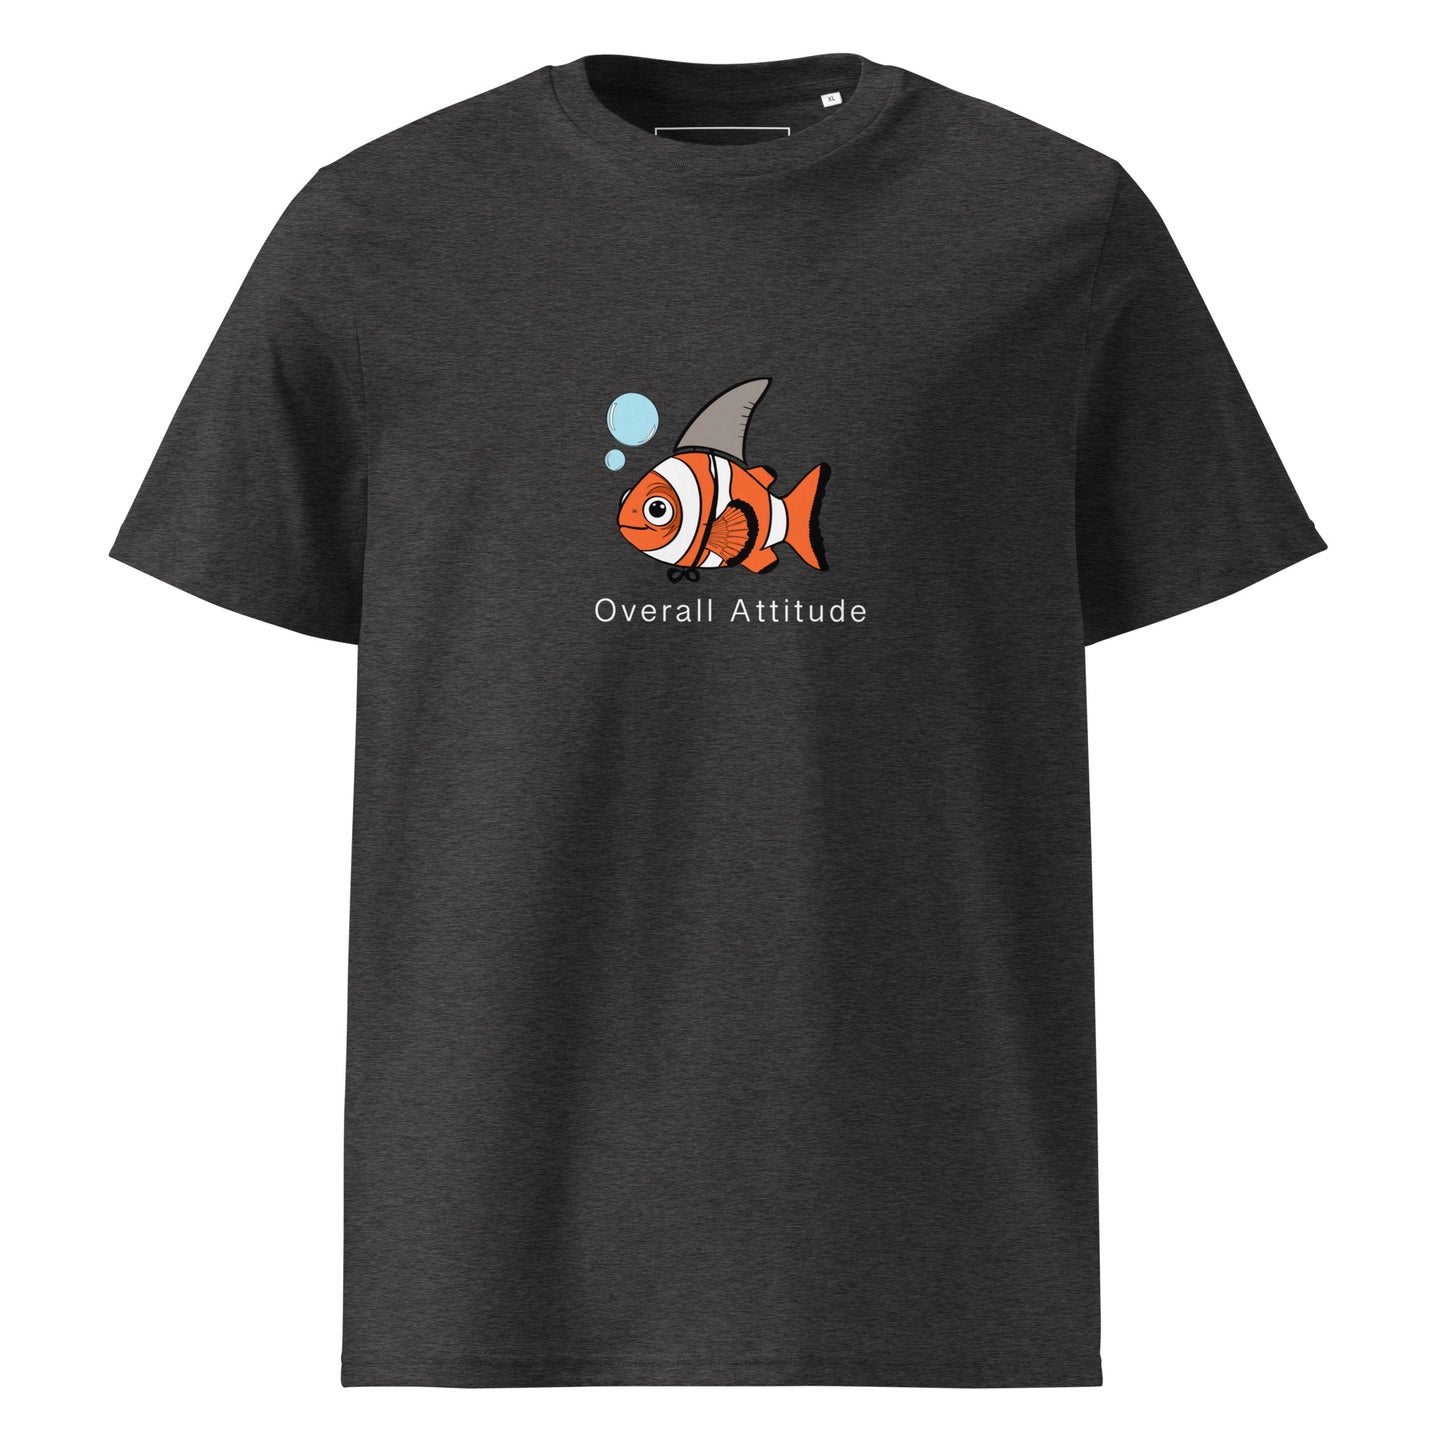 Overall Attitude - Unisex Organic Cotton T-shirt